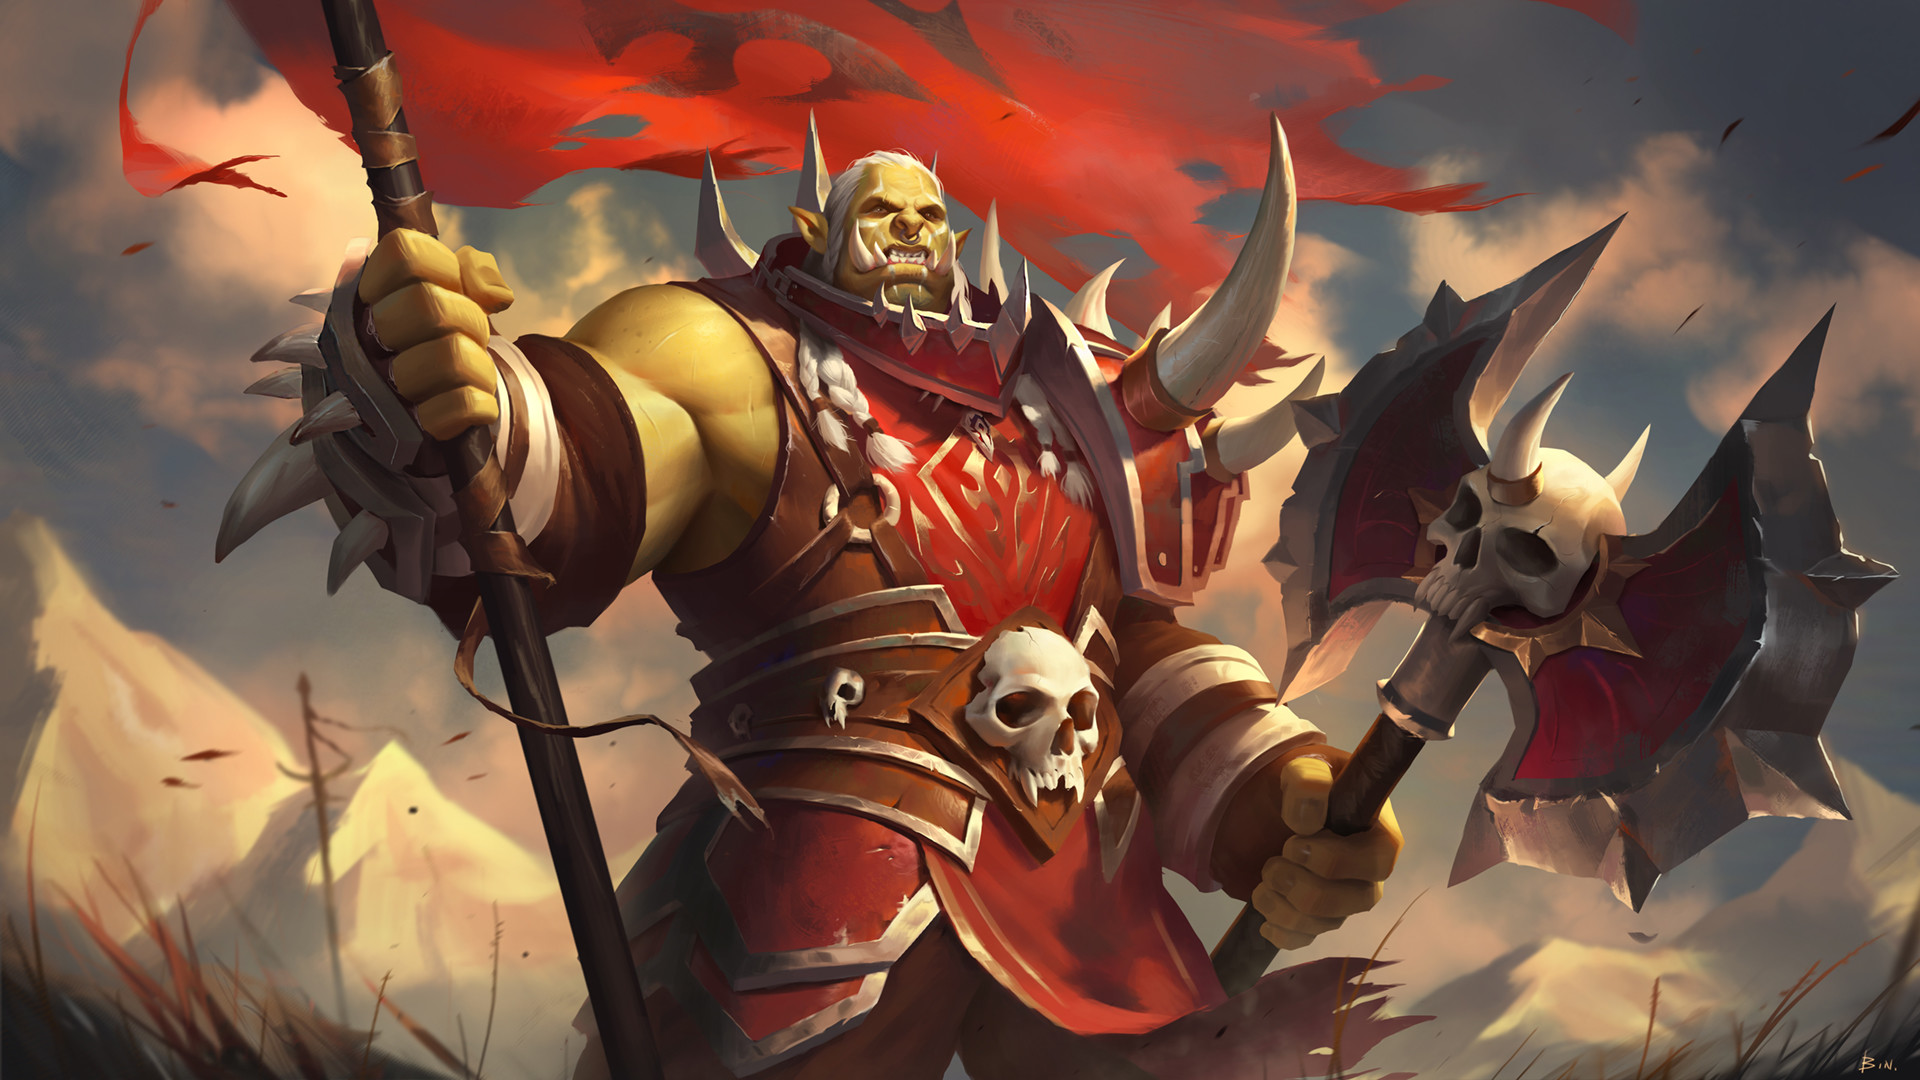 Axe Orc Varok Saurfang Warrior World Of Warcraft 1920x1080